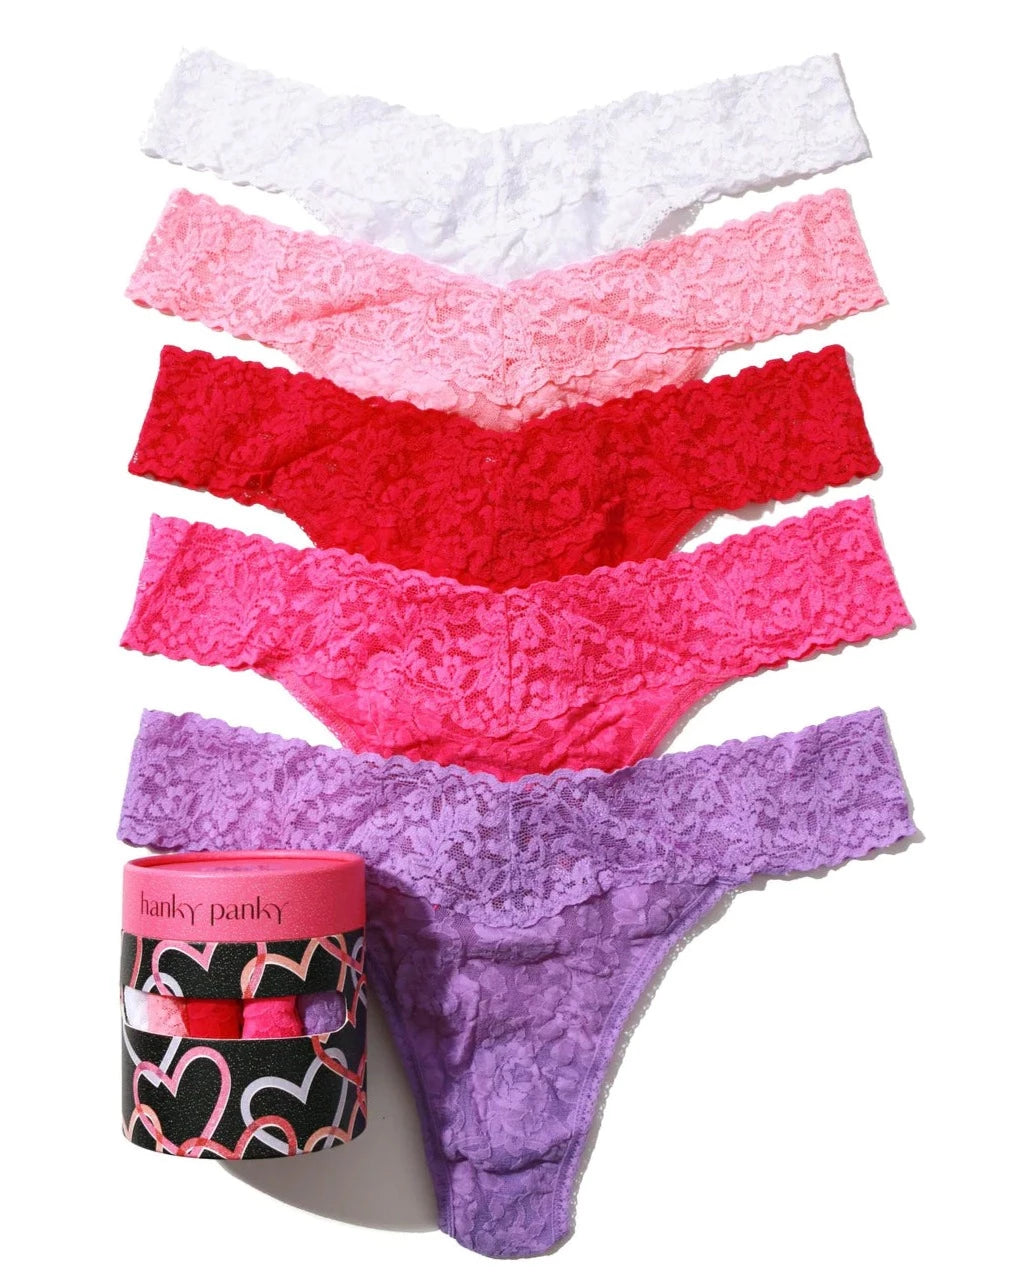 Womens Hanky Panky pink Signature Lace Original Thong